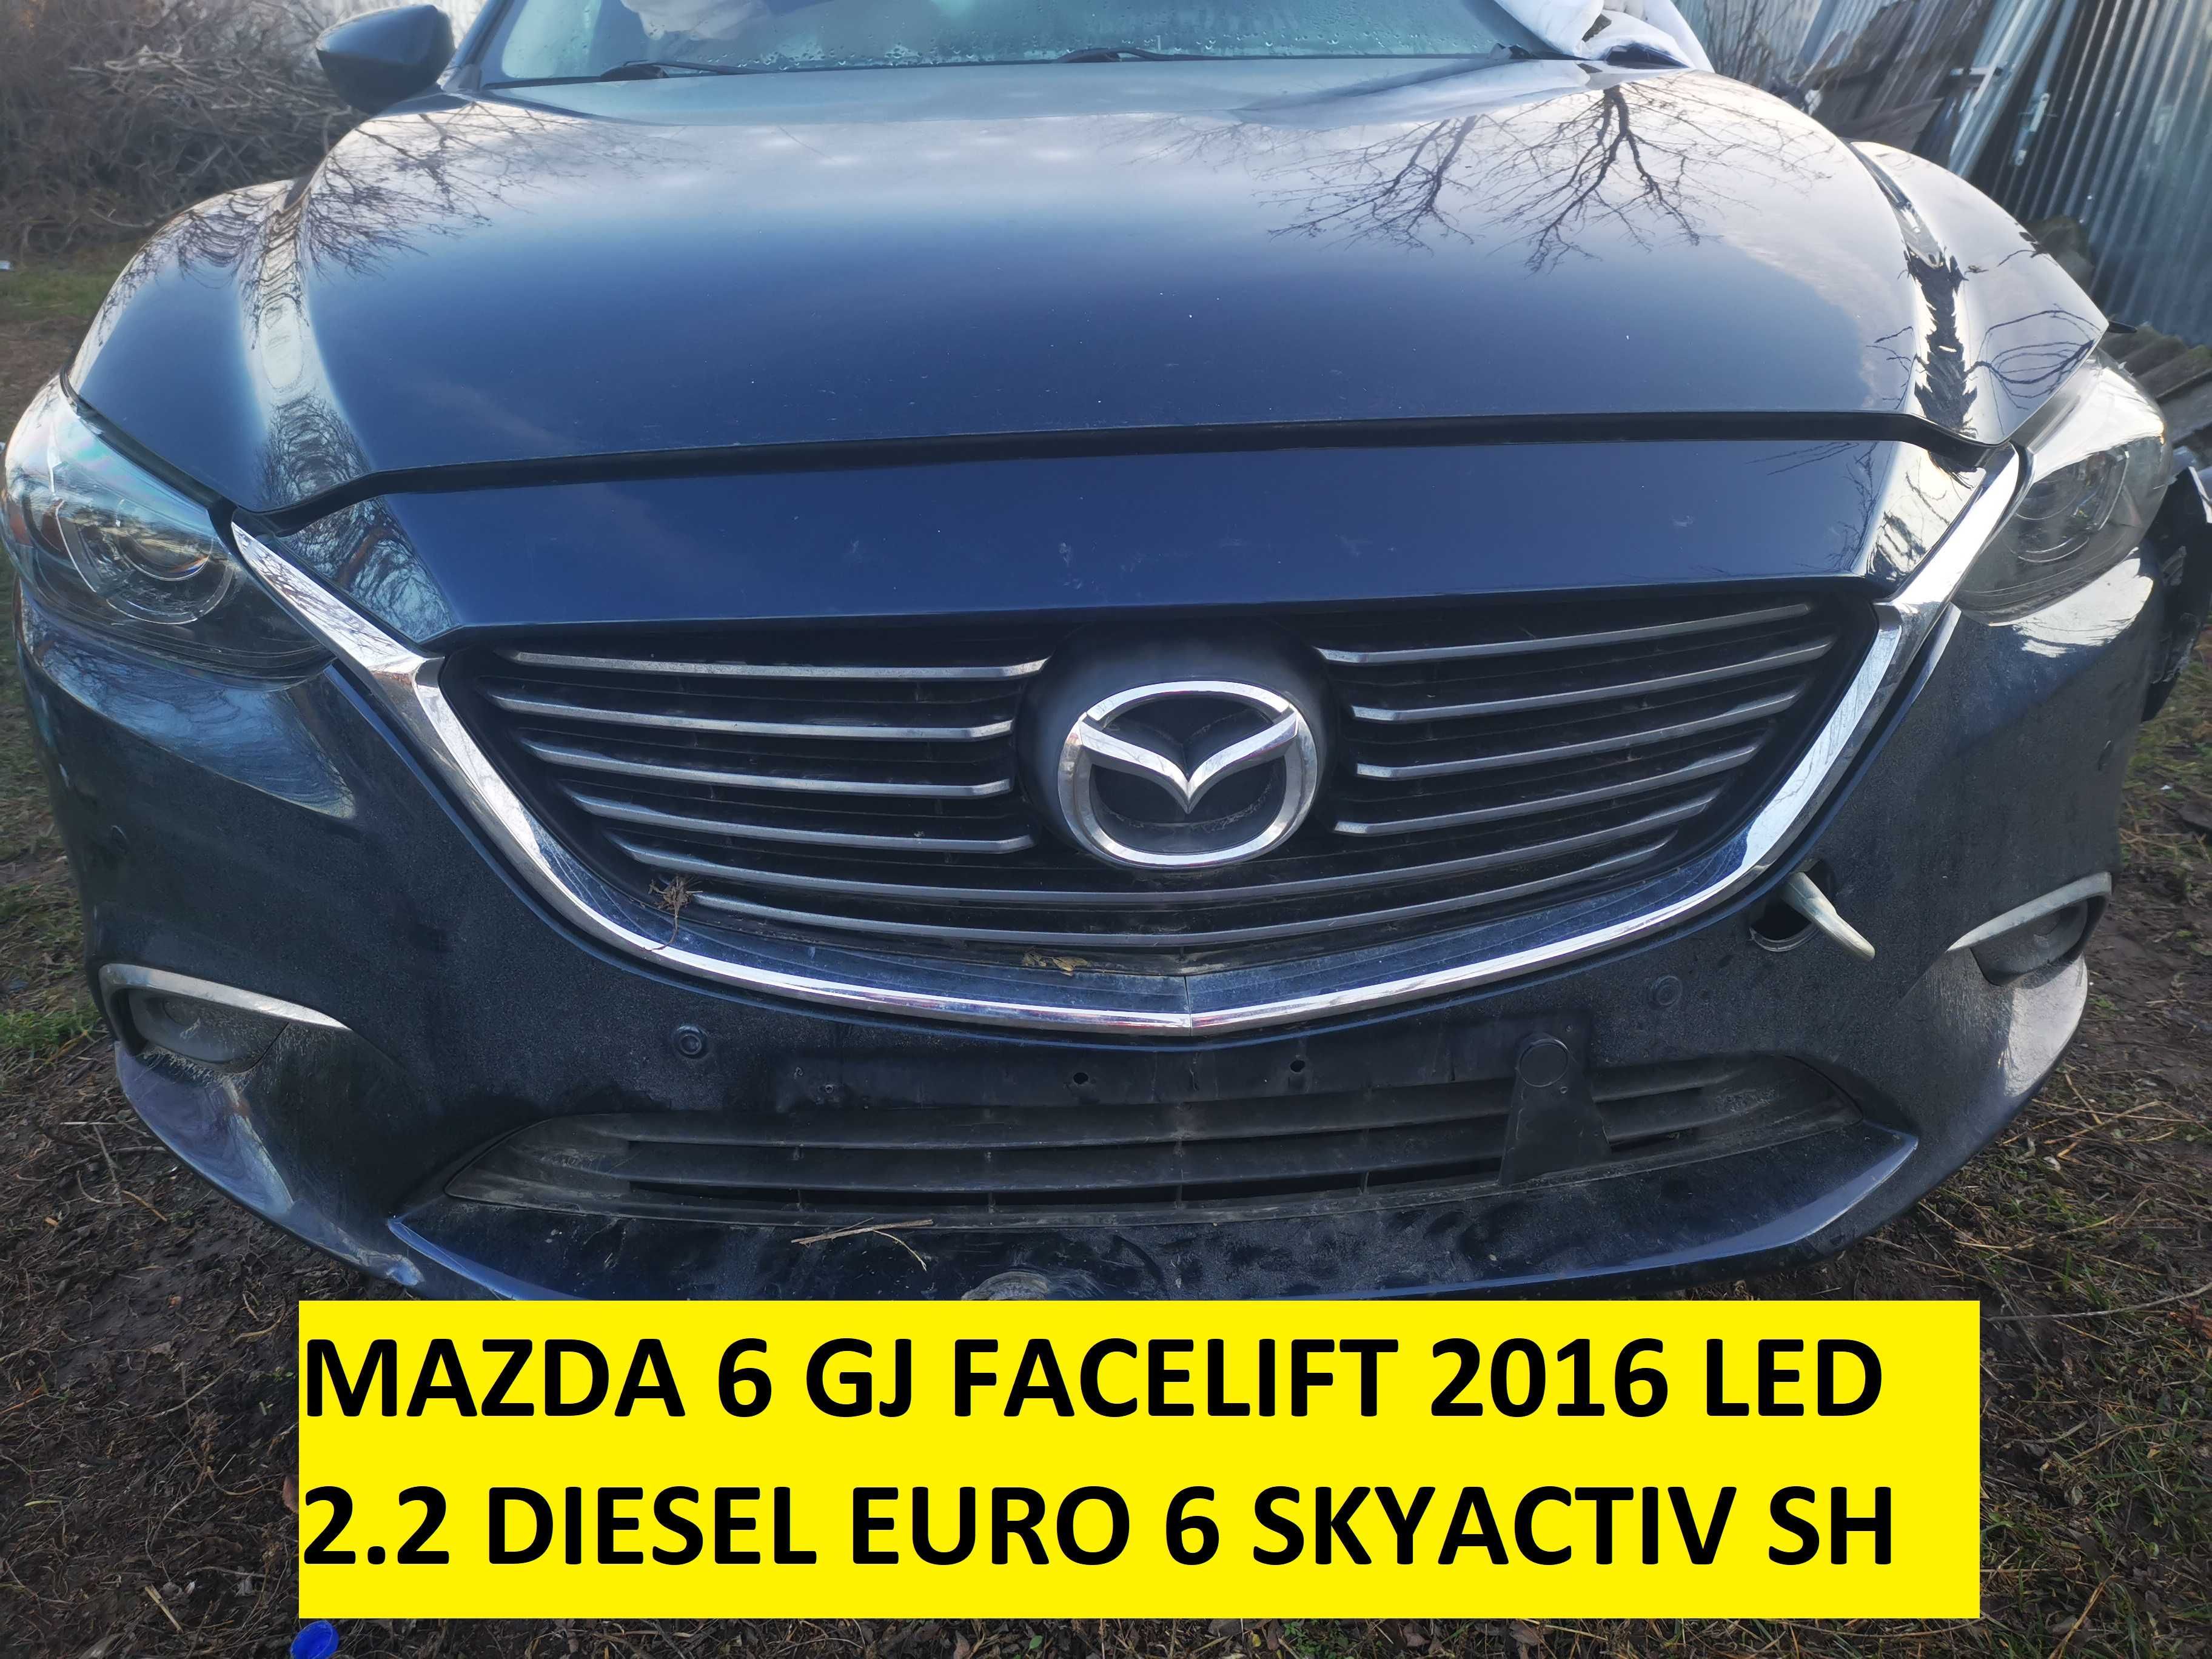 Filtru de particule Mazda 6 2.2 euro 6 skyactiv 2015 2016